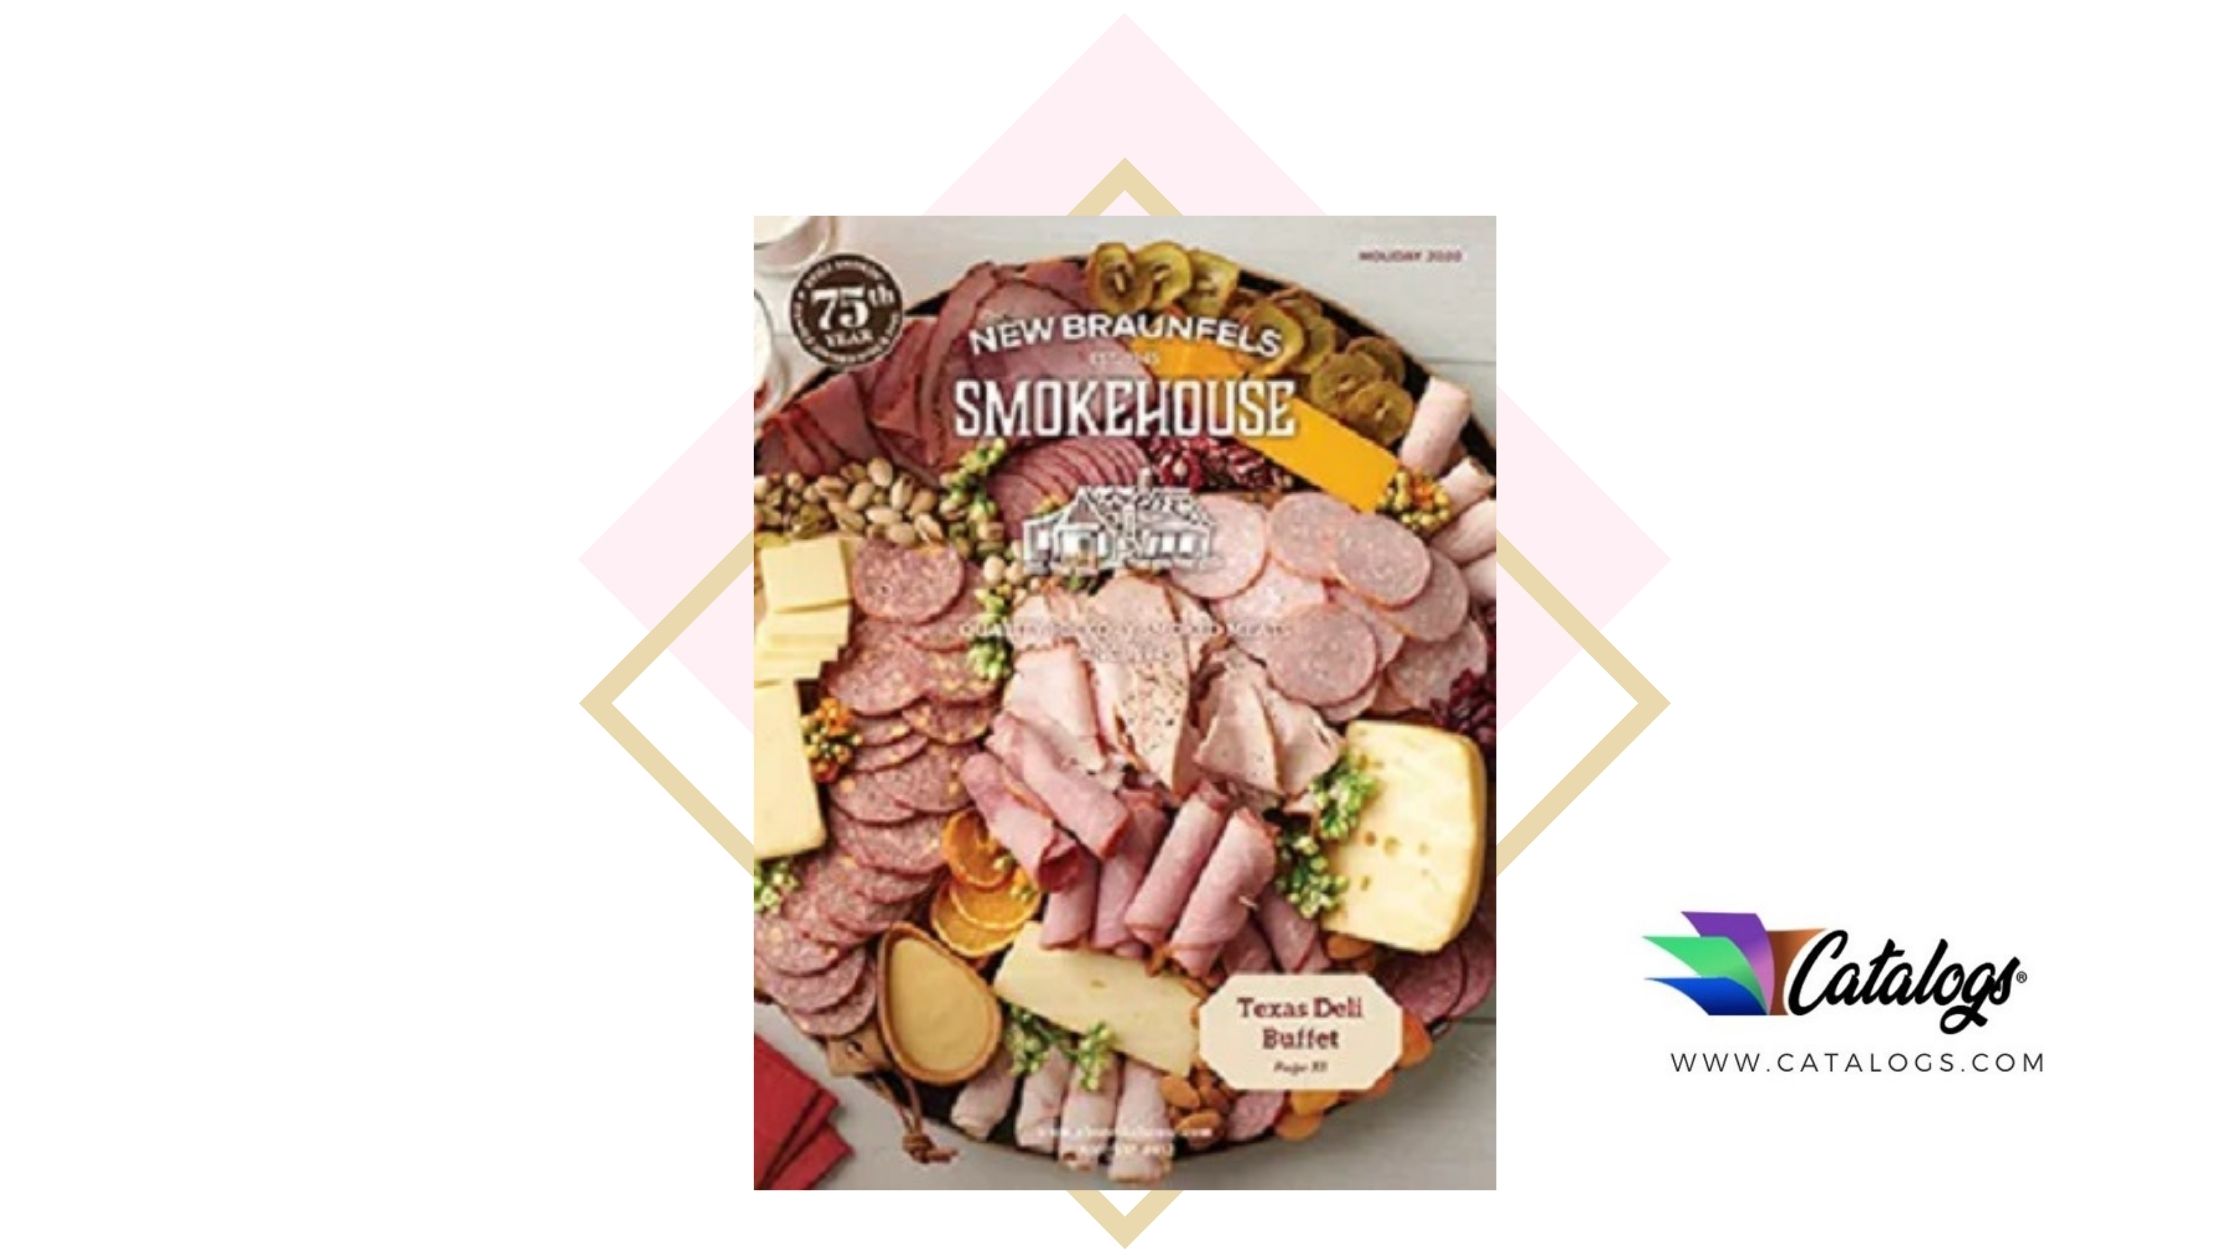 How Do I Order a Free New Braunfels Smokehouse Food & Gourmet Catalog?